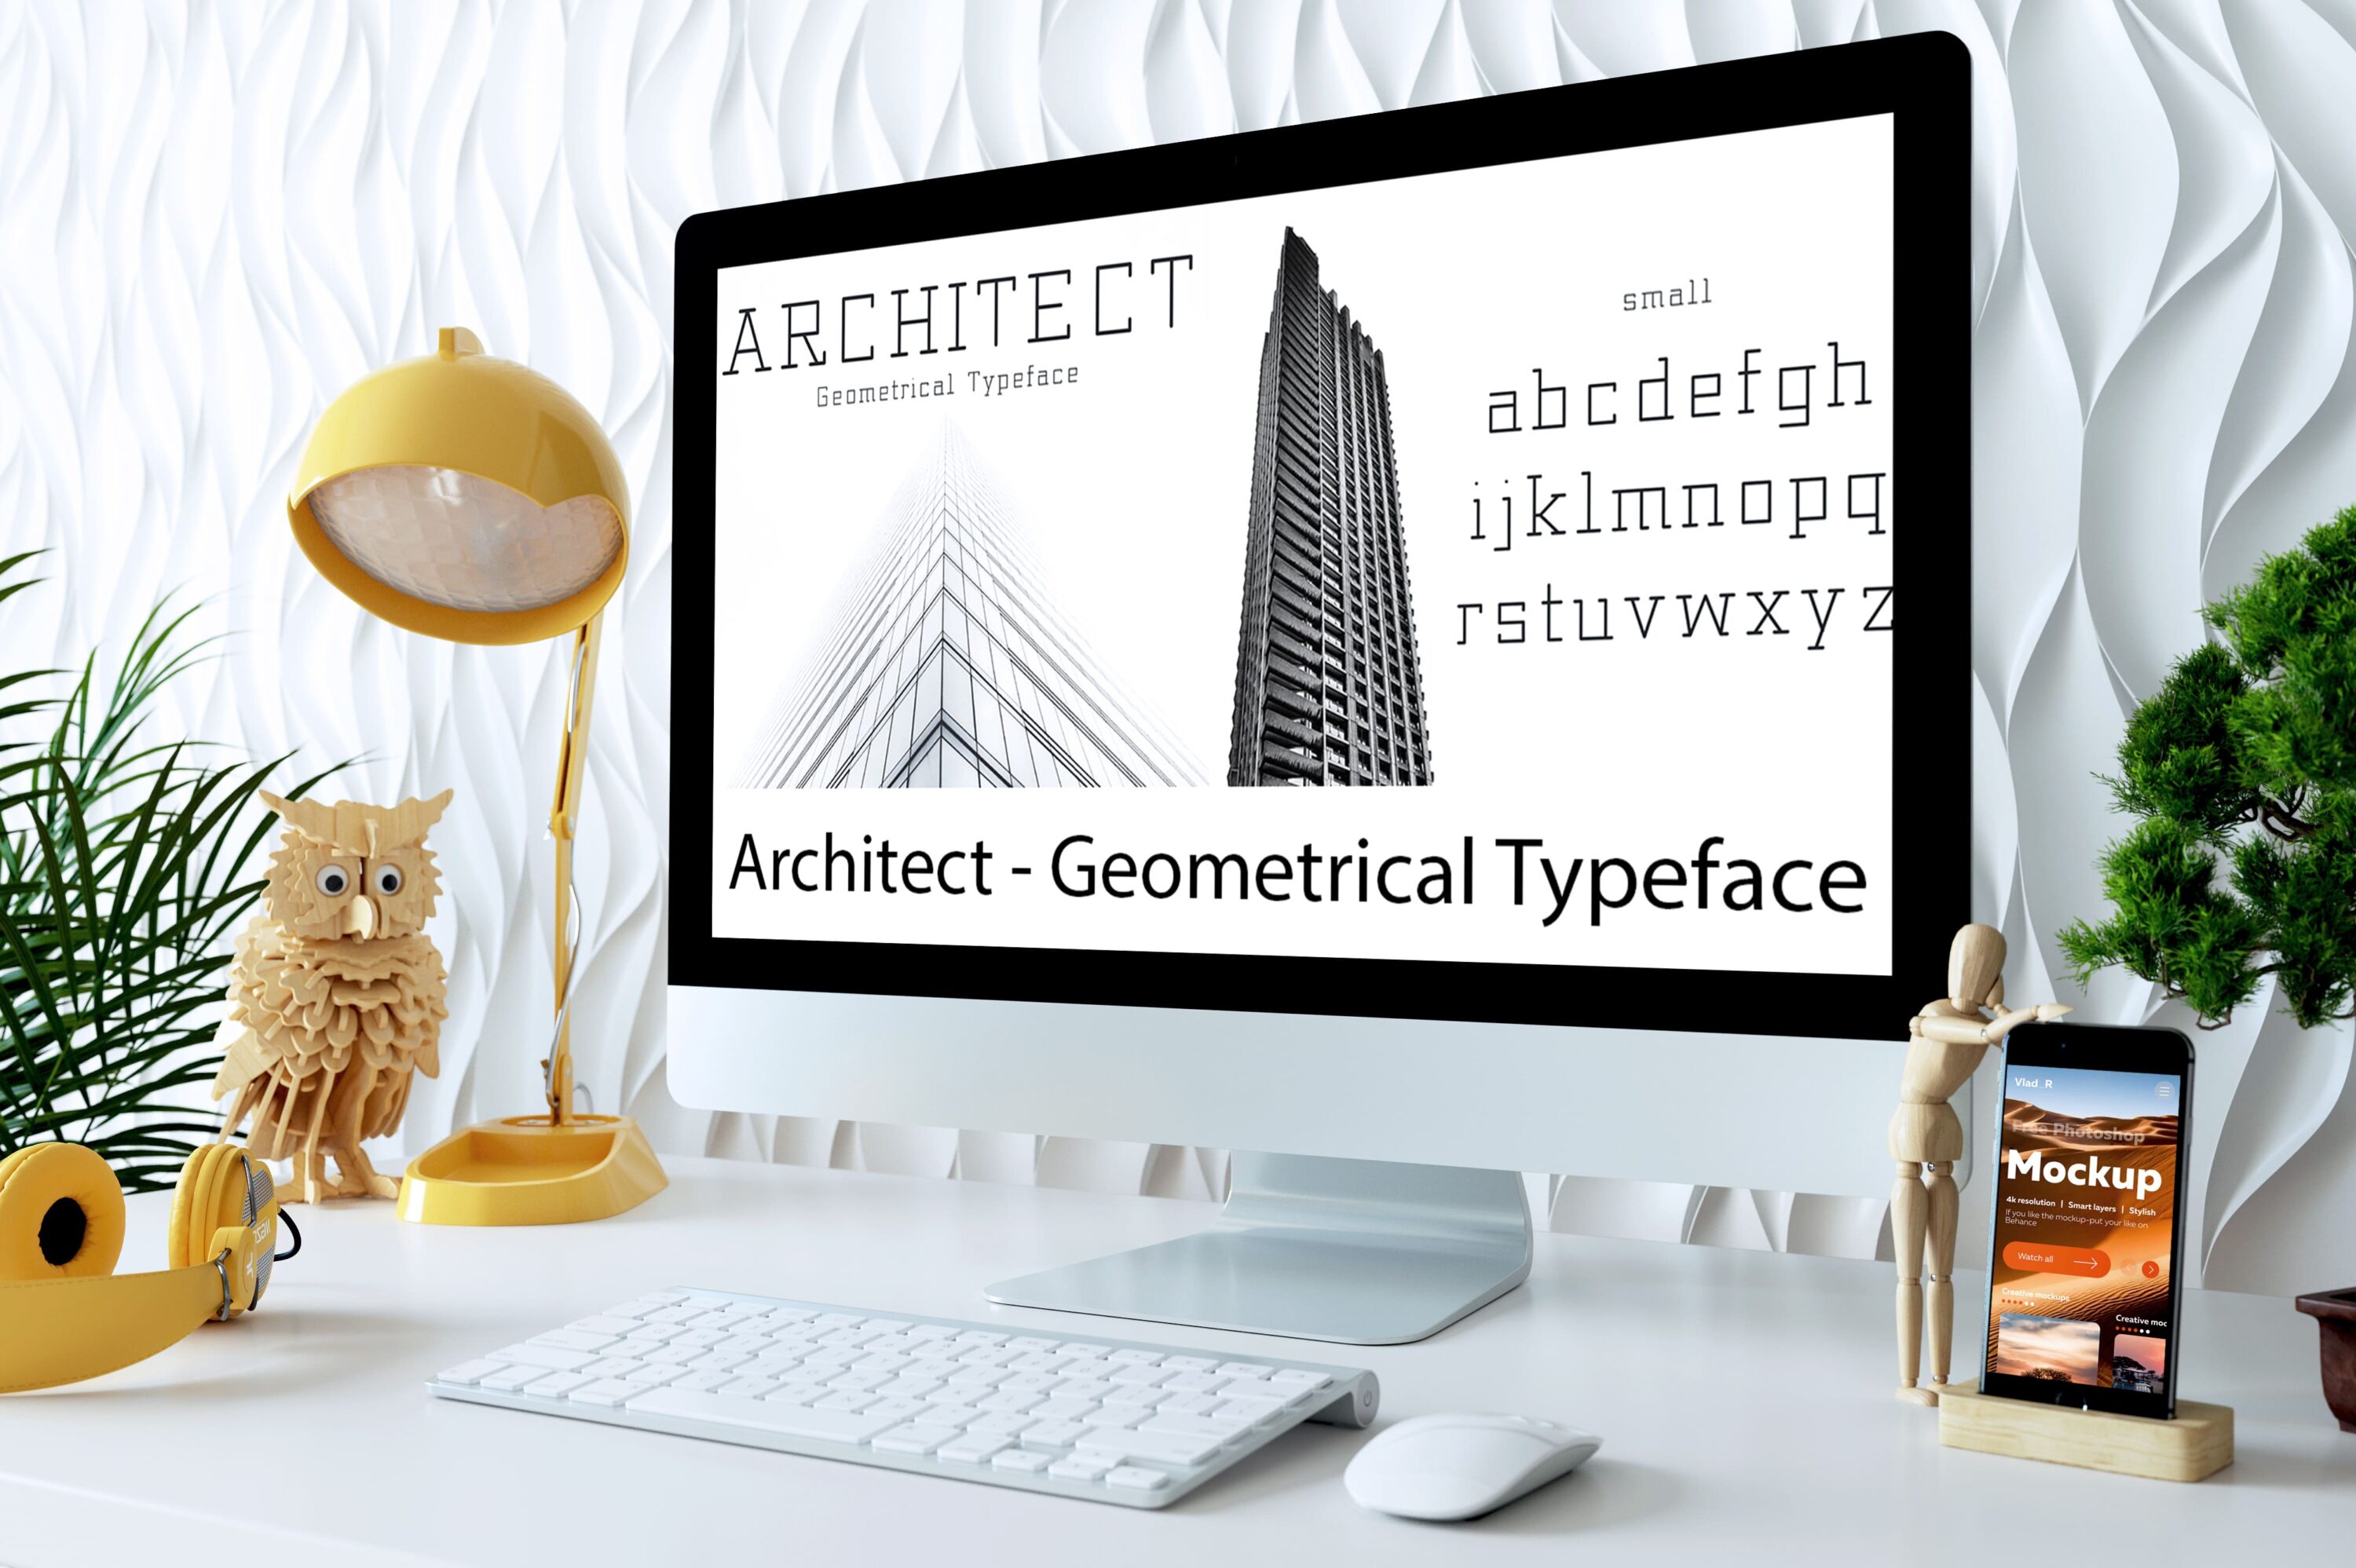 Desktop option of the Architect - Geometrical Typeface.